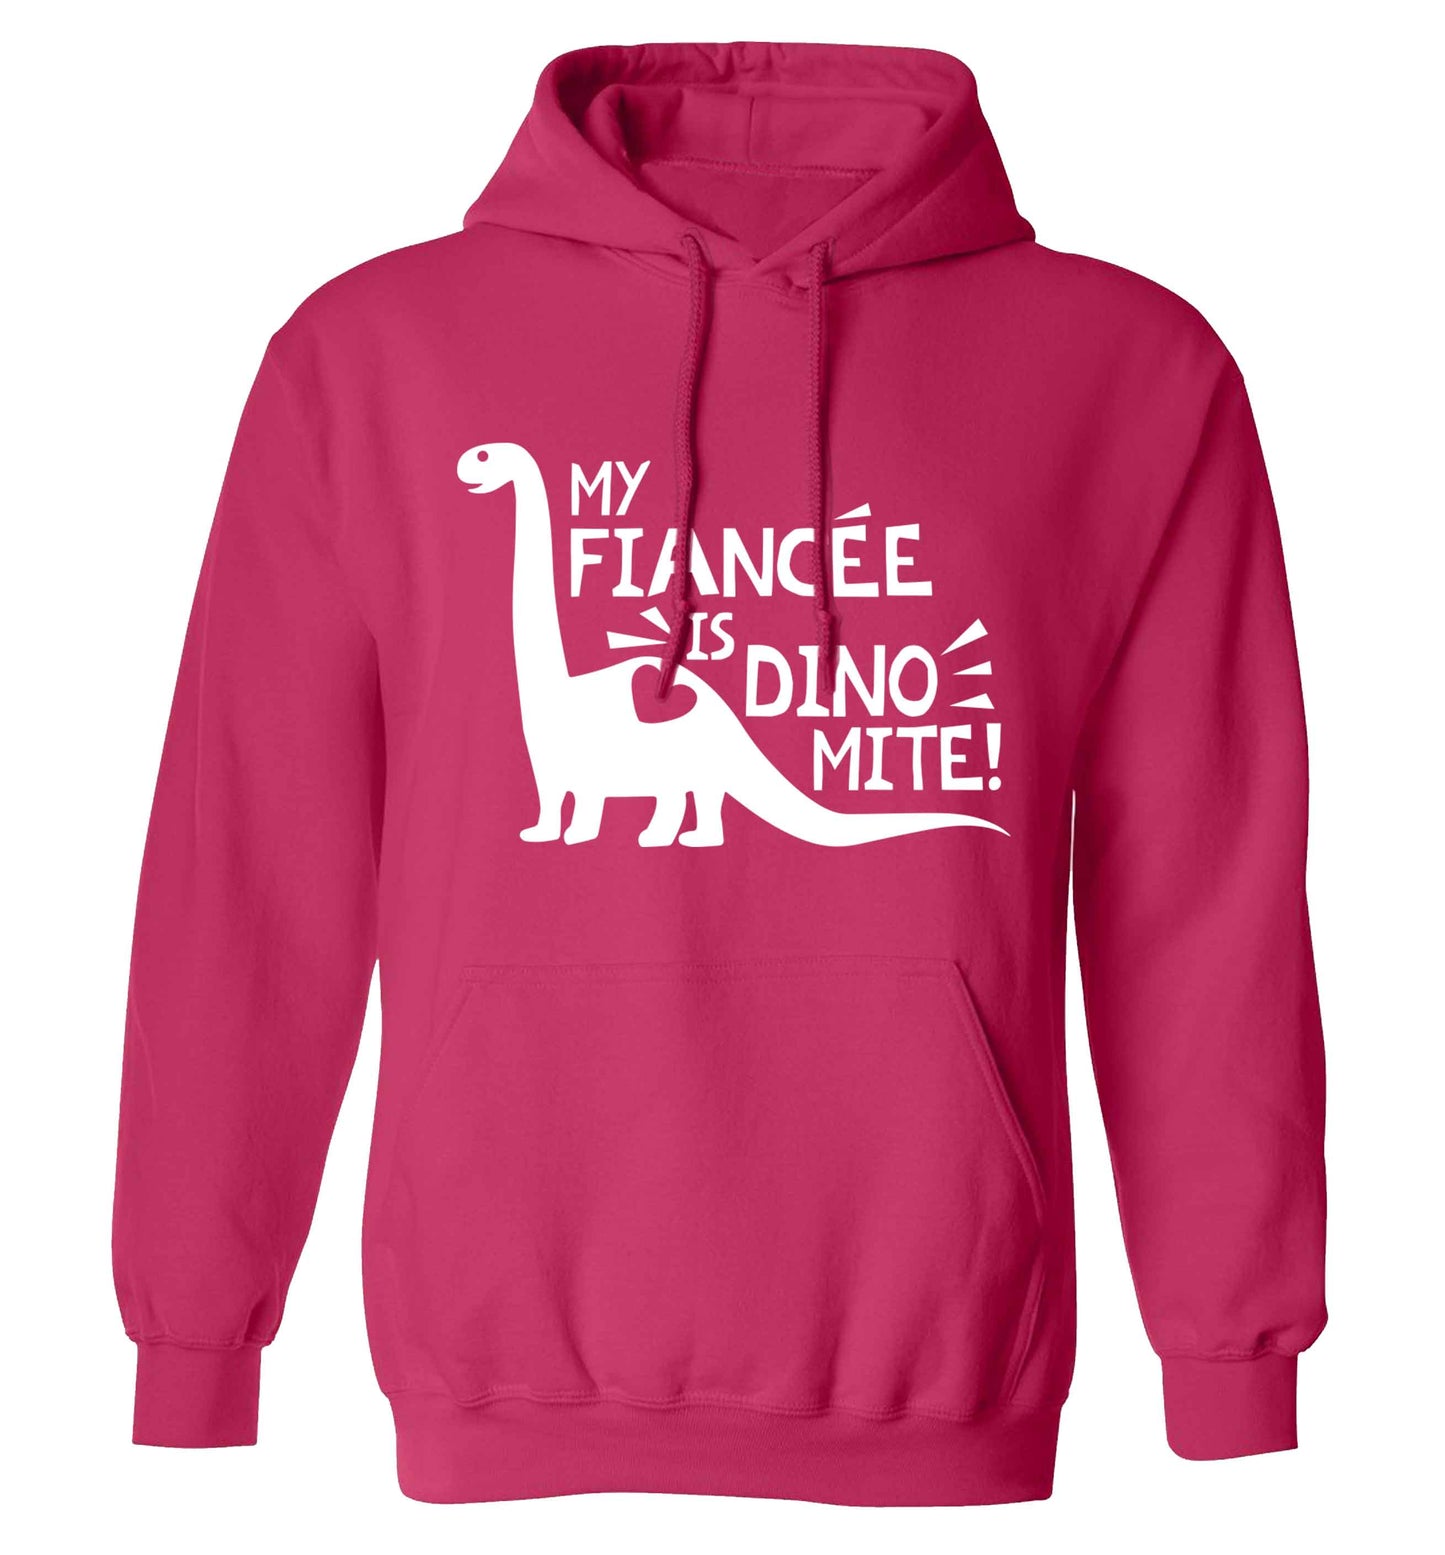 My fiancee is dinomite! adults unisex pink hoodie 2XL